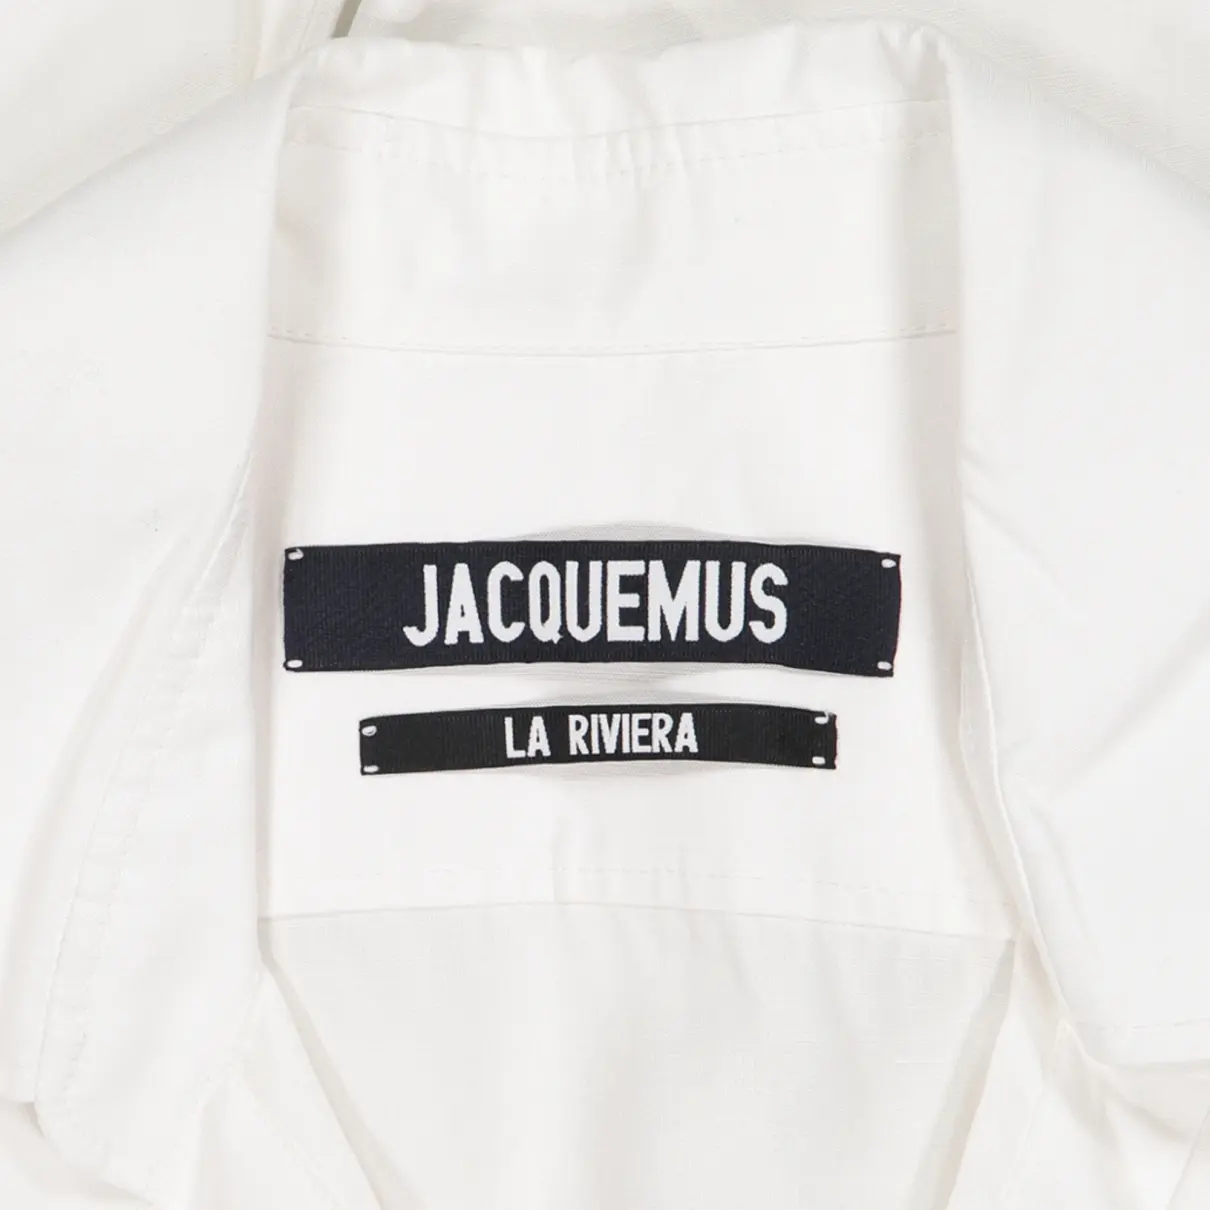 Buy Jacquemus La Riviera shirt online